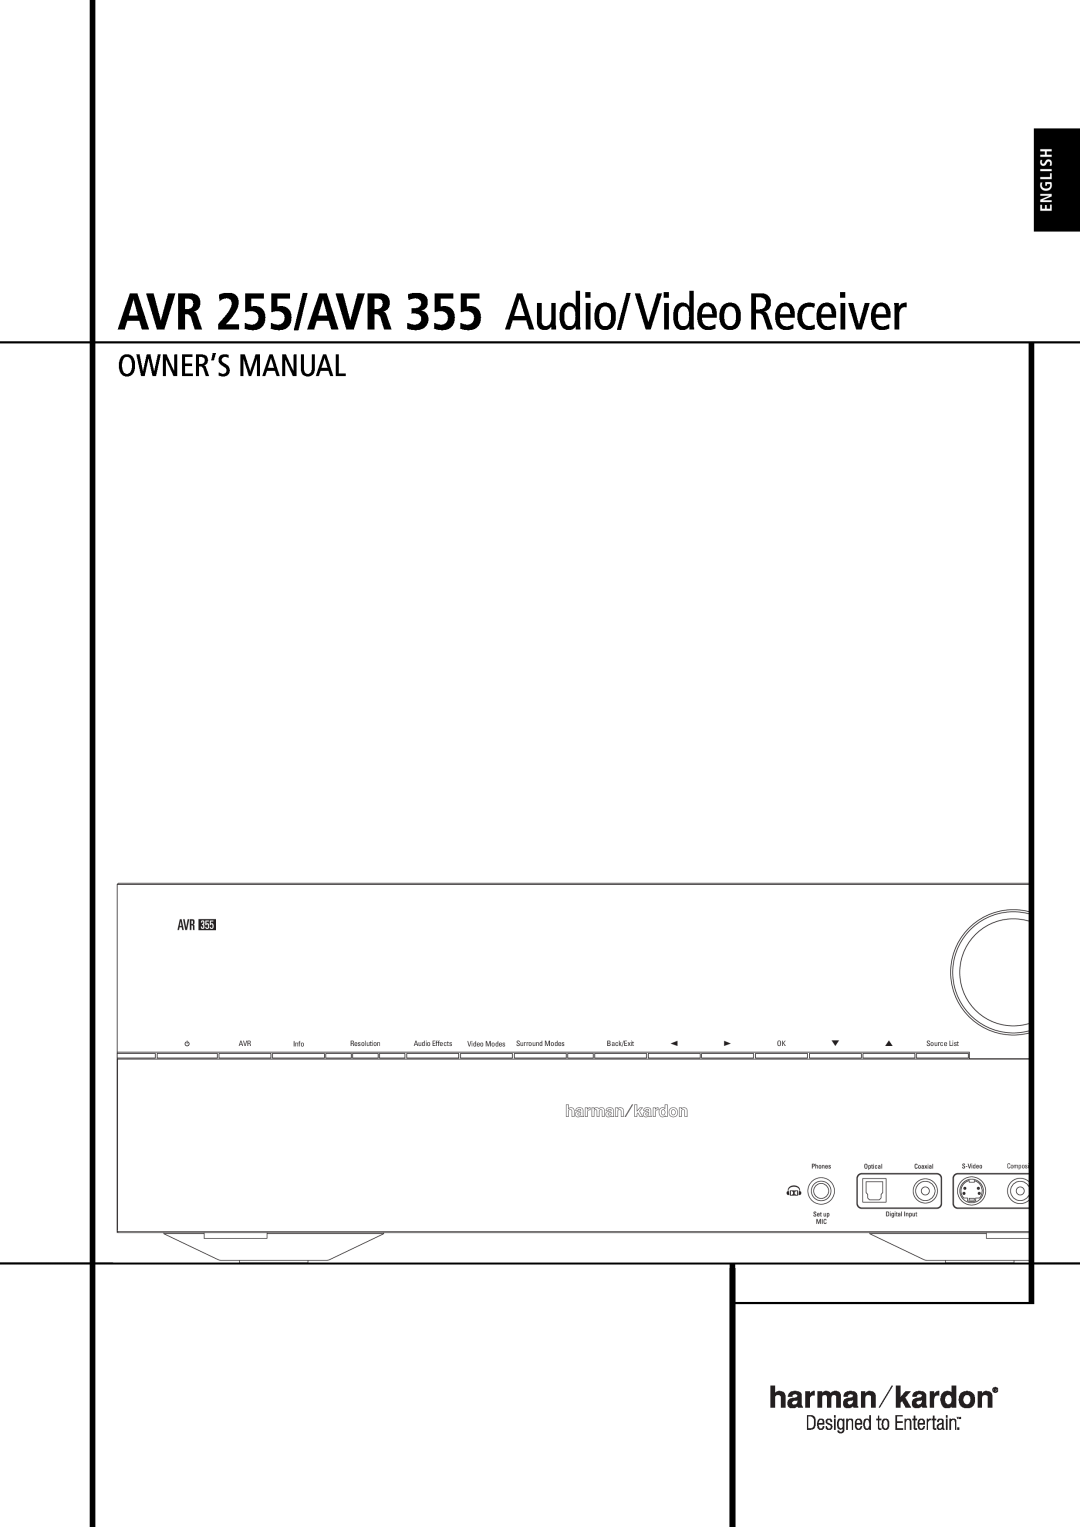 Harman-Kardon owner manual Owner’S Manual, AVR 255/AVR 355 Audio/VideoReceiver, English 